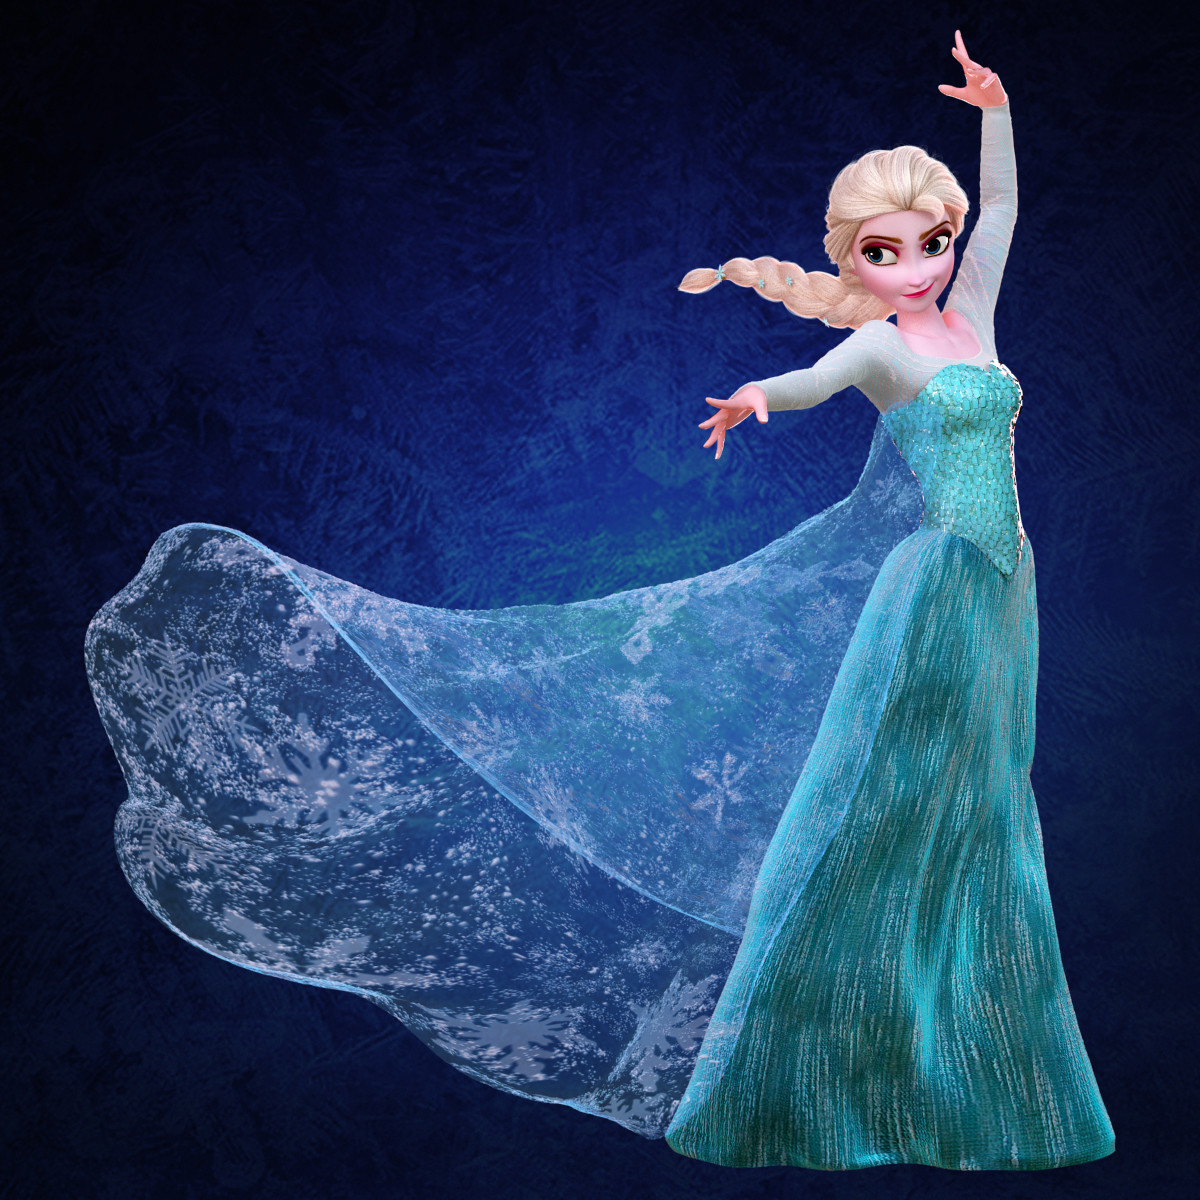 Sgwa Yang - Princess Elsa of Frozen characters